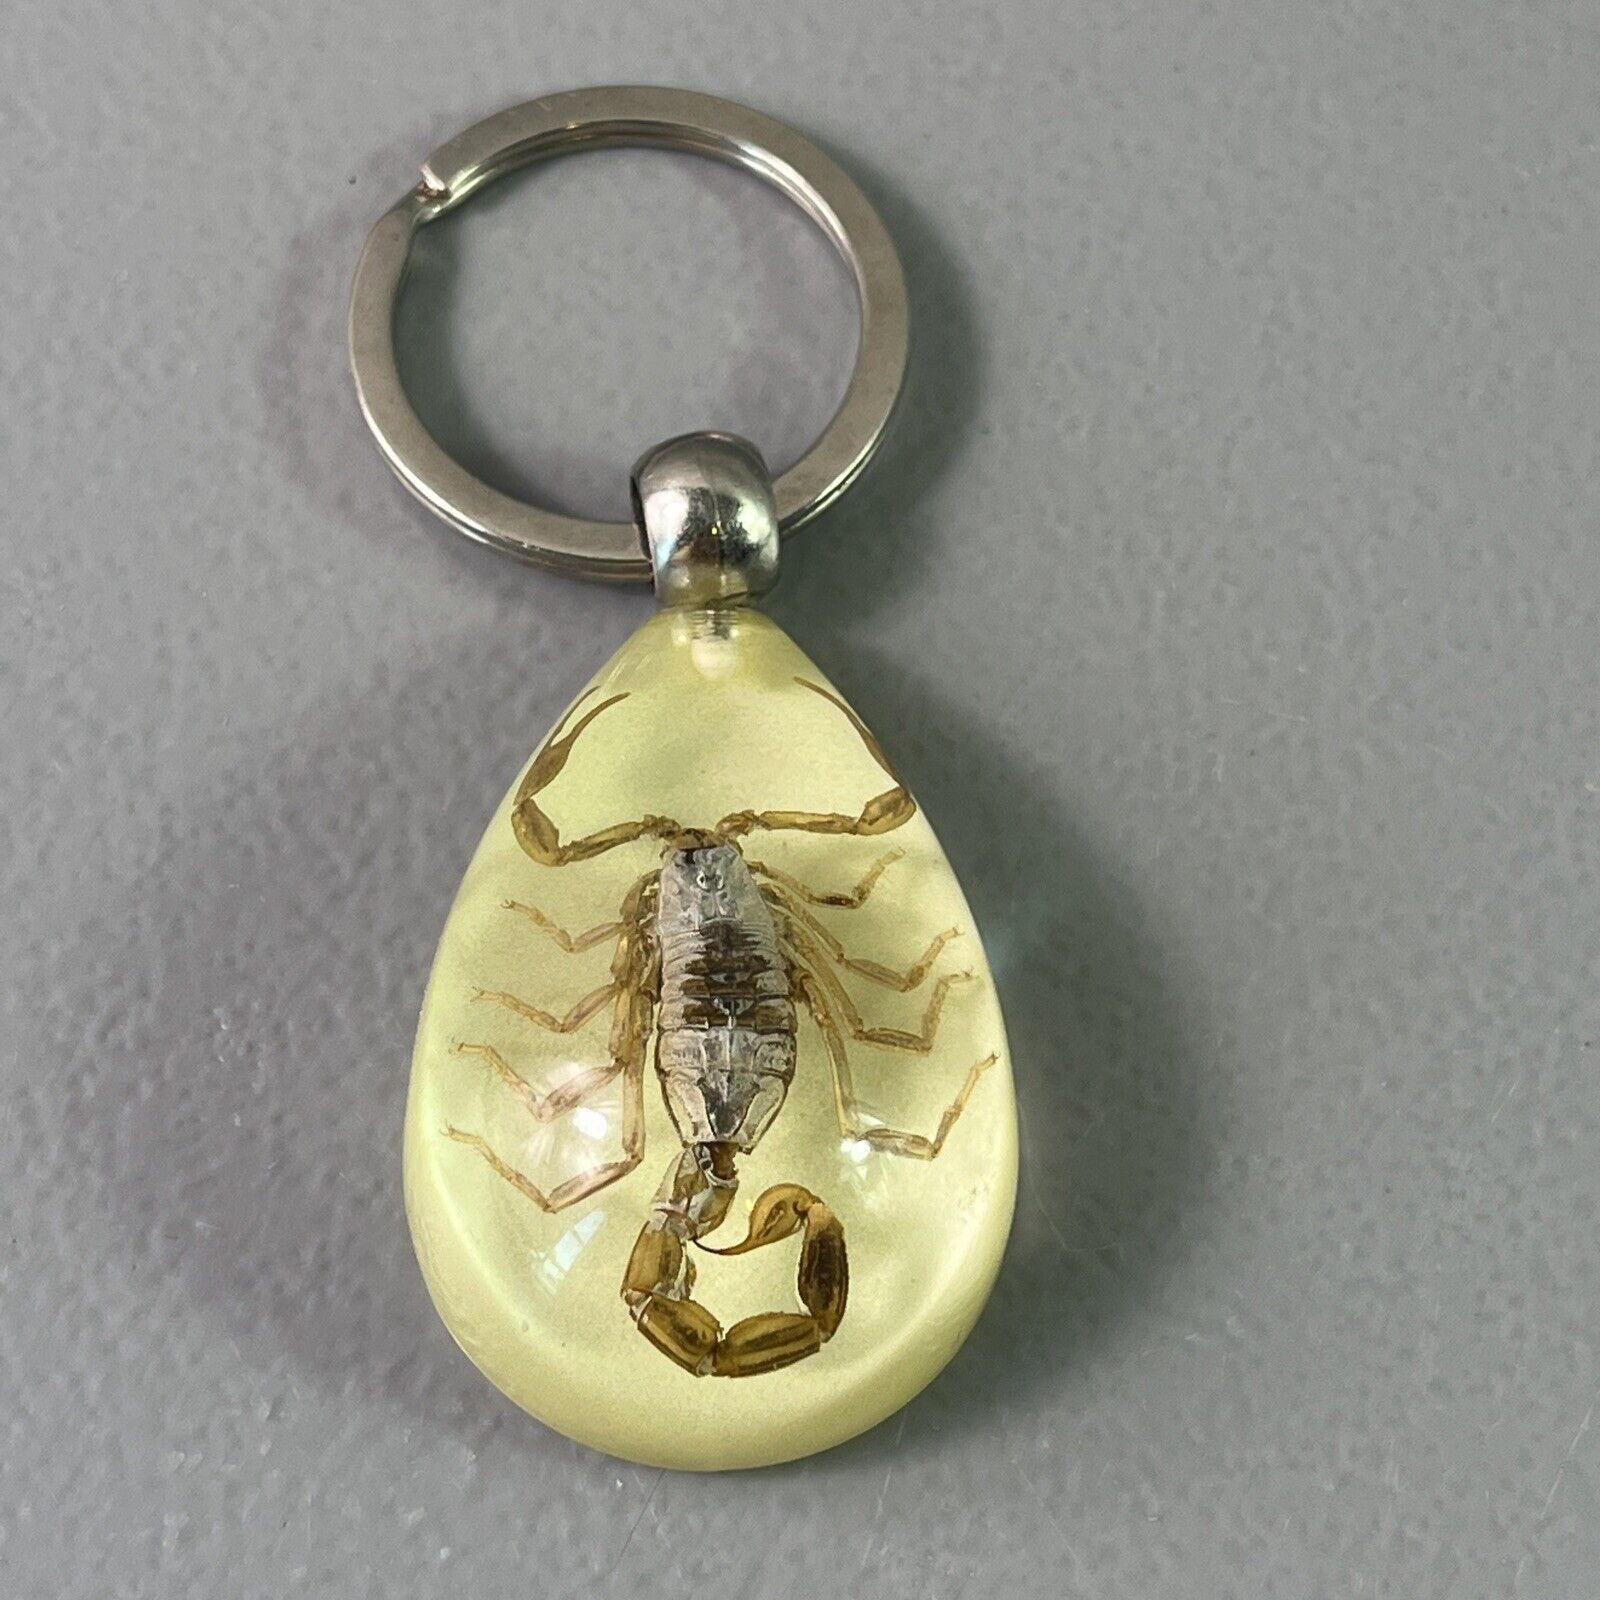 Real Scorpion Keychain/Keyring in Amber Resin Gold Scorpion Glows Scorpio